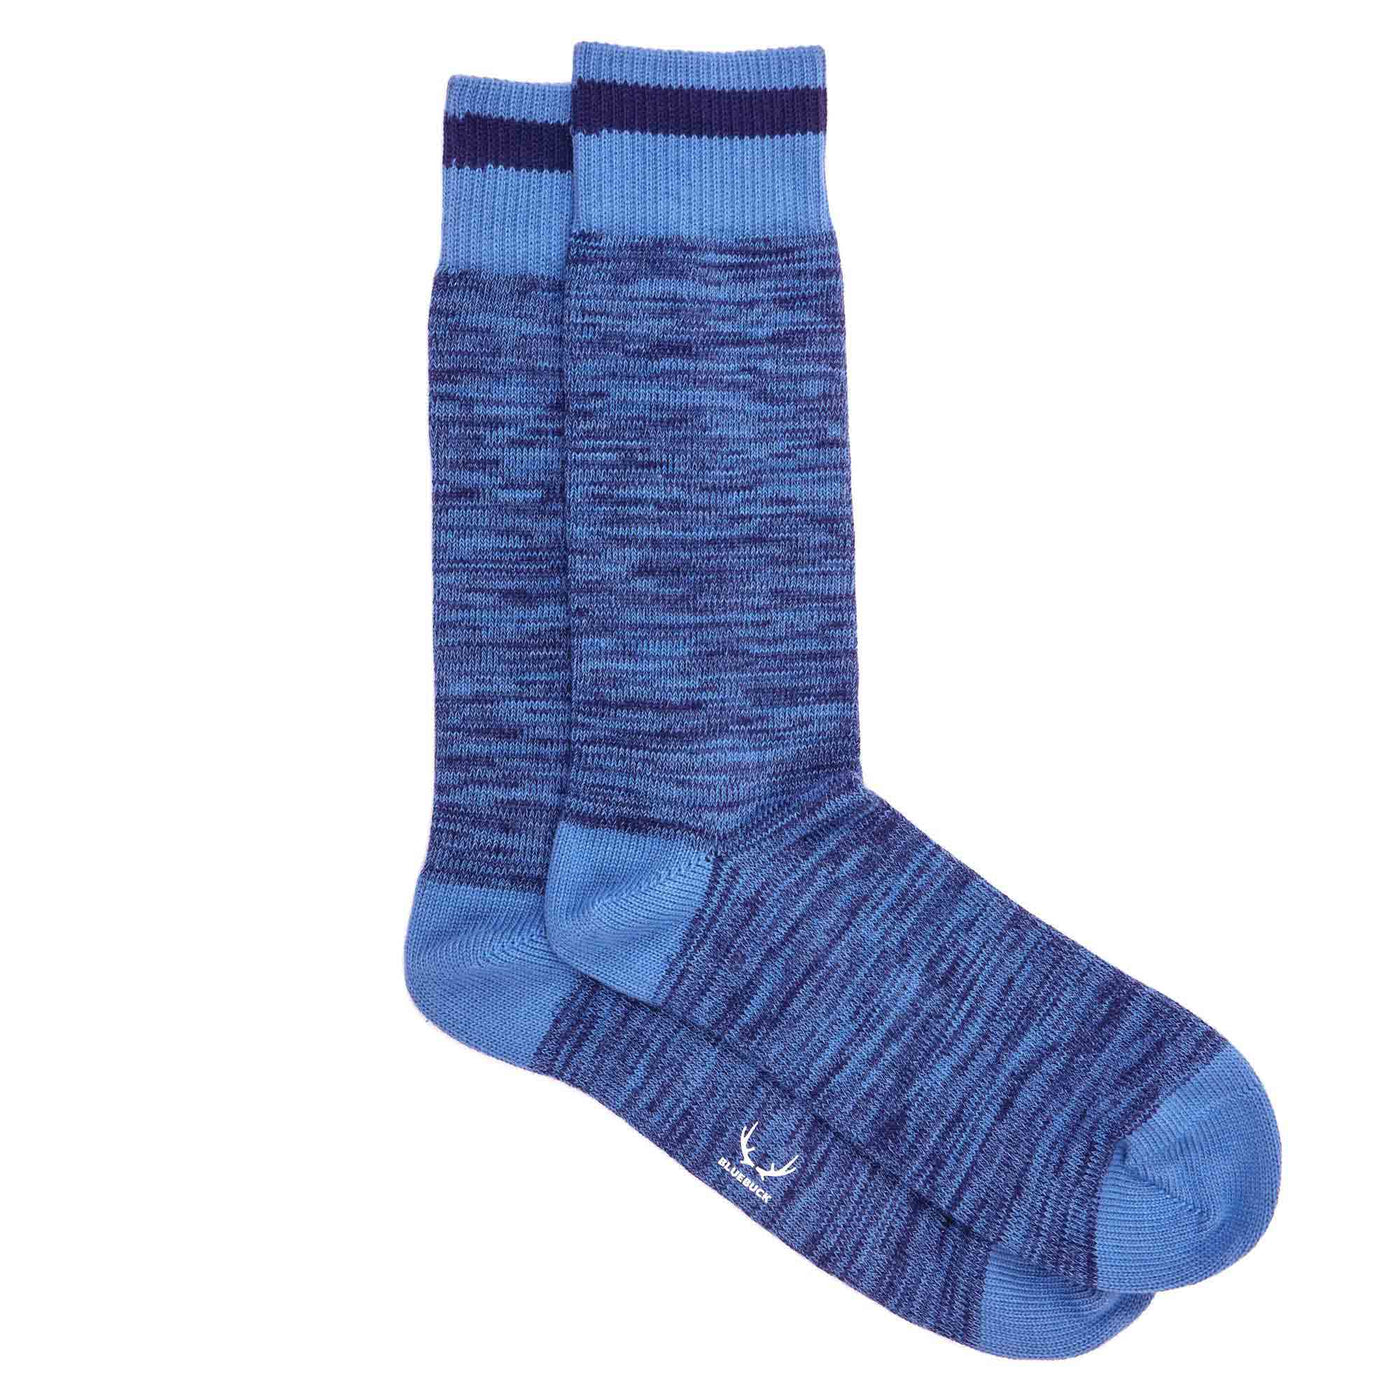 Strong blue organic cotton men"s socks